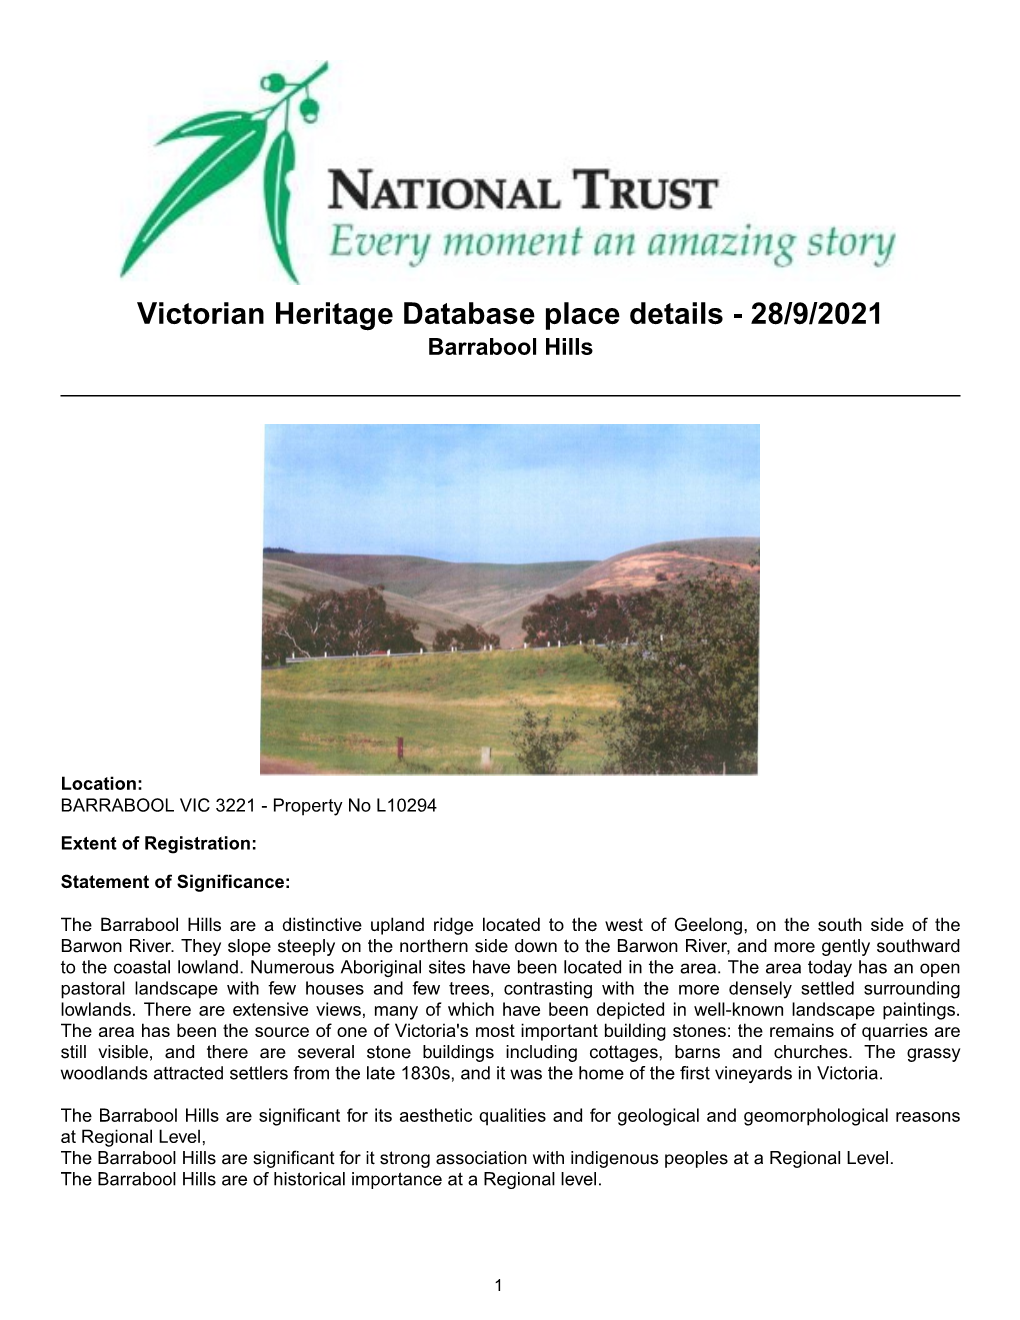 Victorian Heritage Database Place Details - 28/9/2021 Barrabool Hills